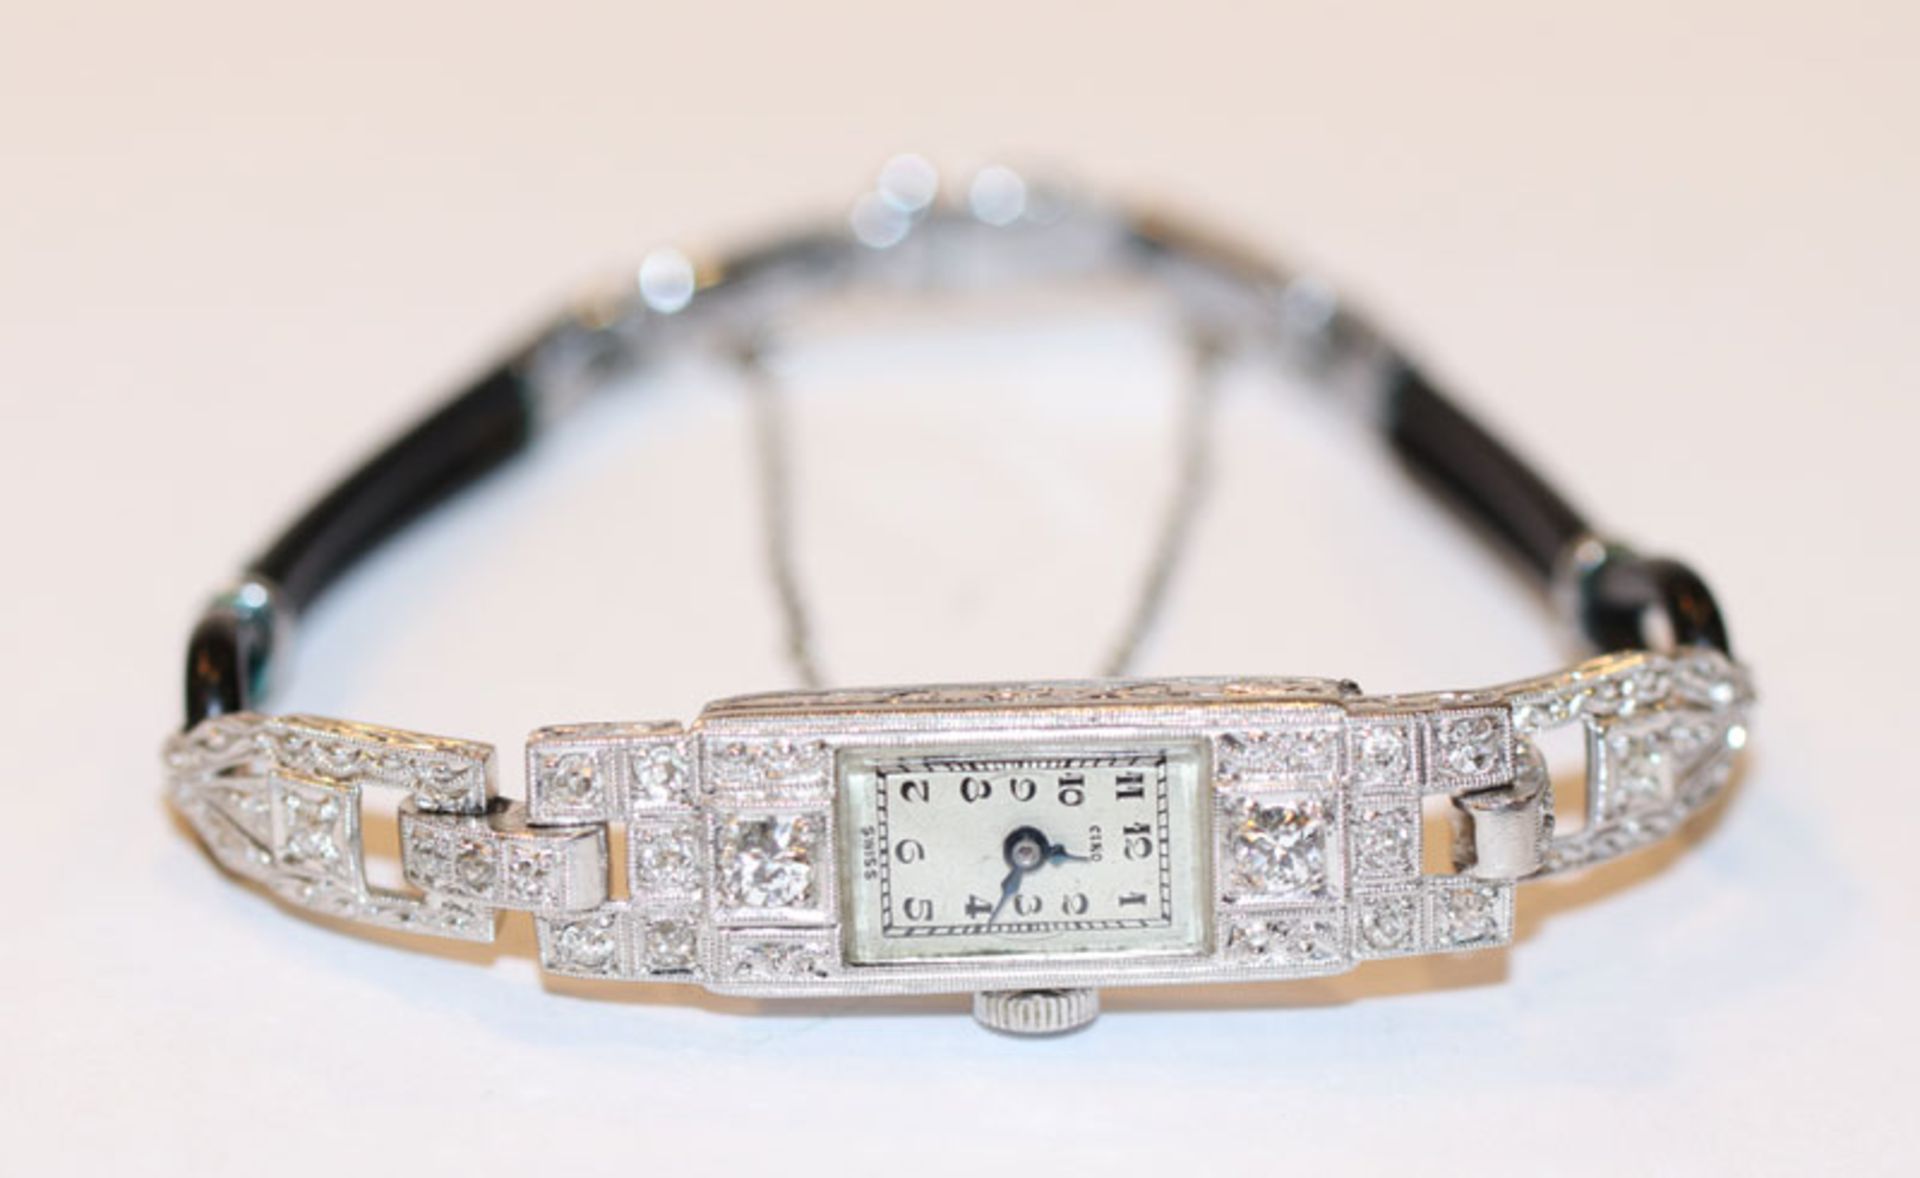 Dekorative Platin Damen Armbanduhr mit 20 Diamanten besetzt, Schweiz um 1920/30, intakt, an